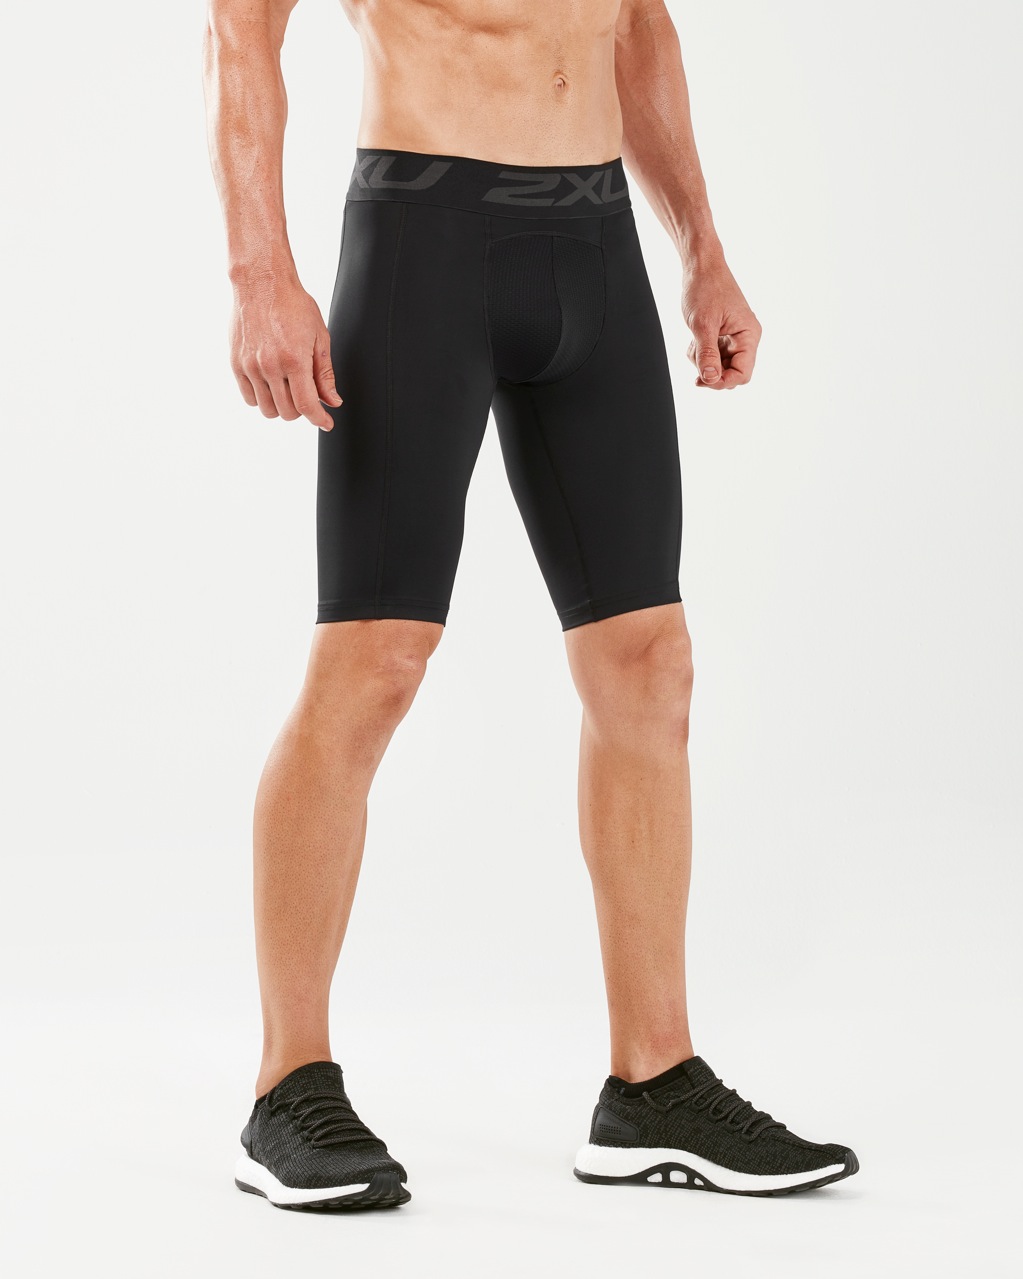 2XU Men's Accelerate Compression Shorts G2 - Black/Silver